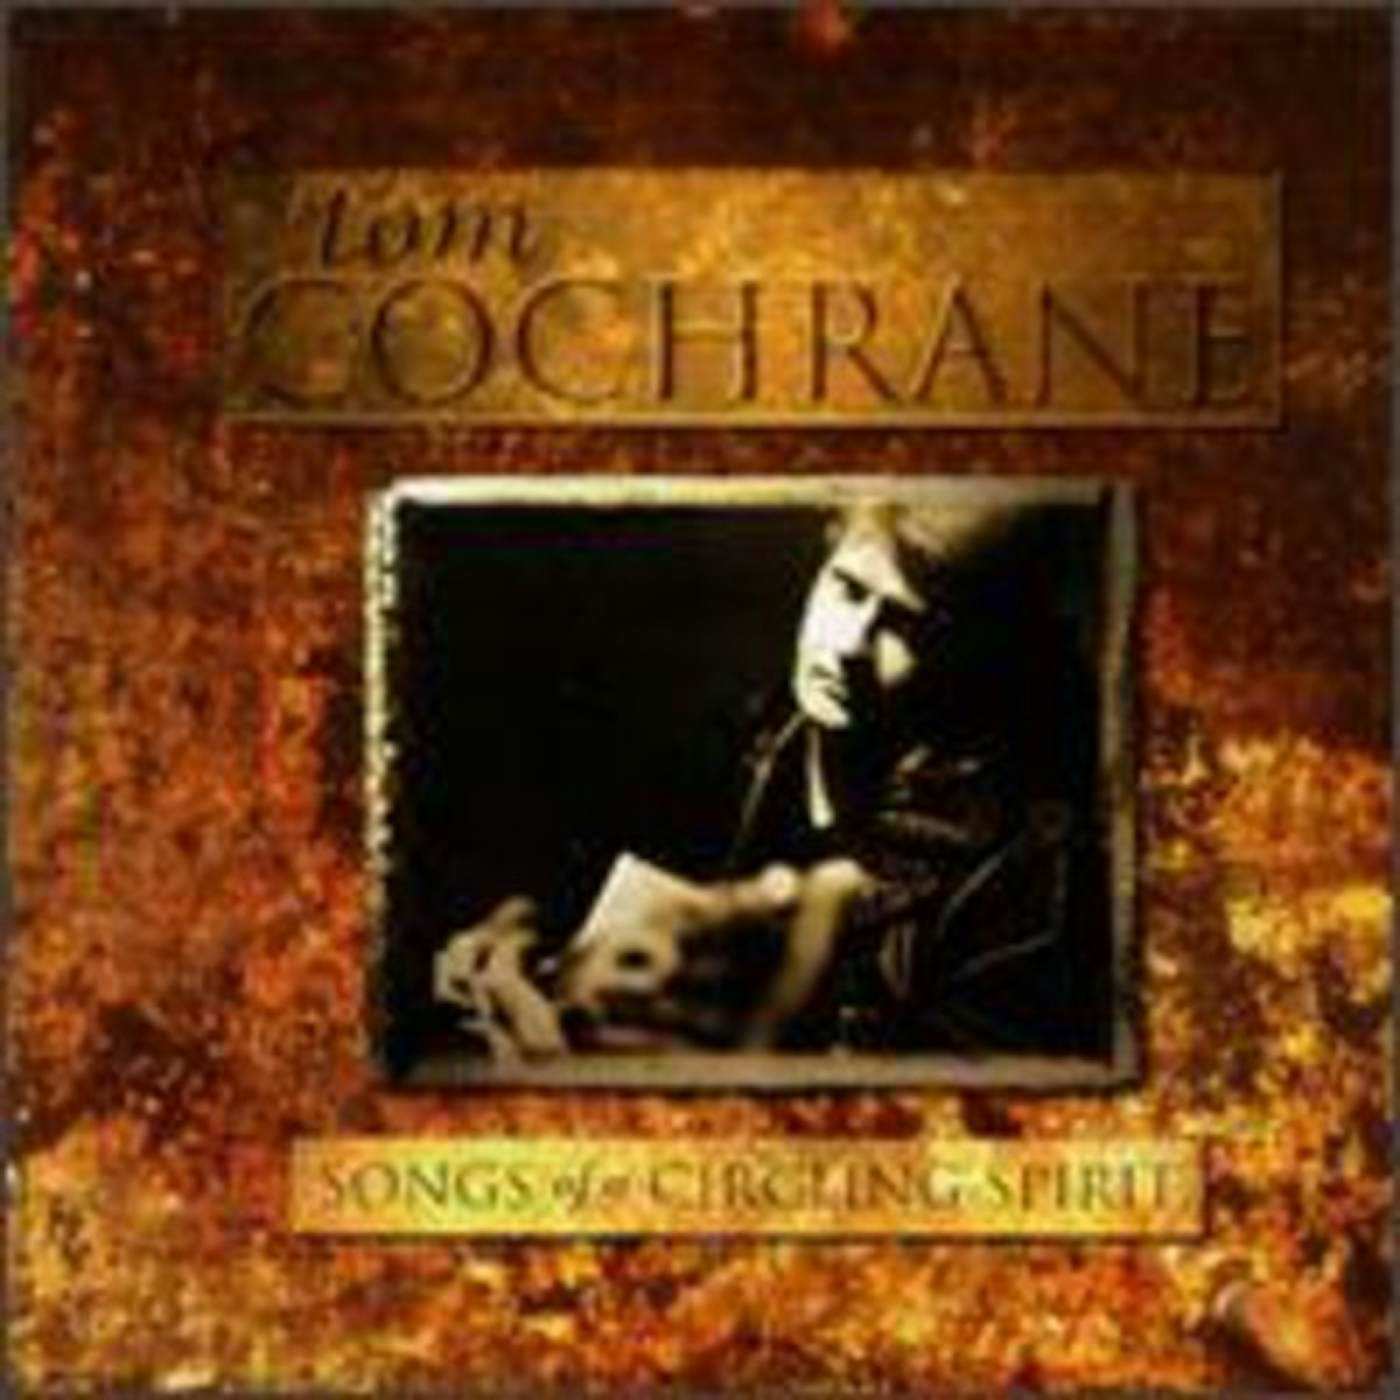 Tom Cochrane SONGS OF A CIRCLING SPIRIT CD